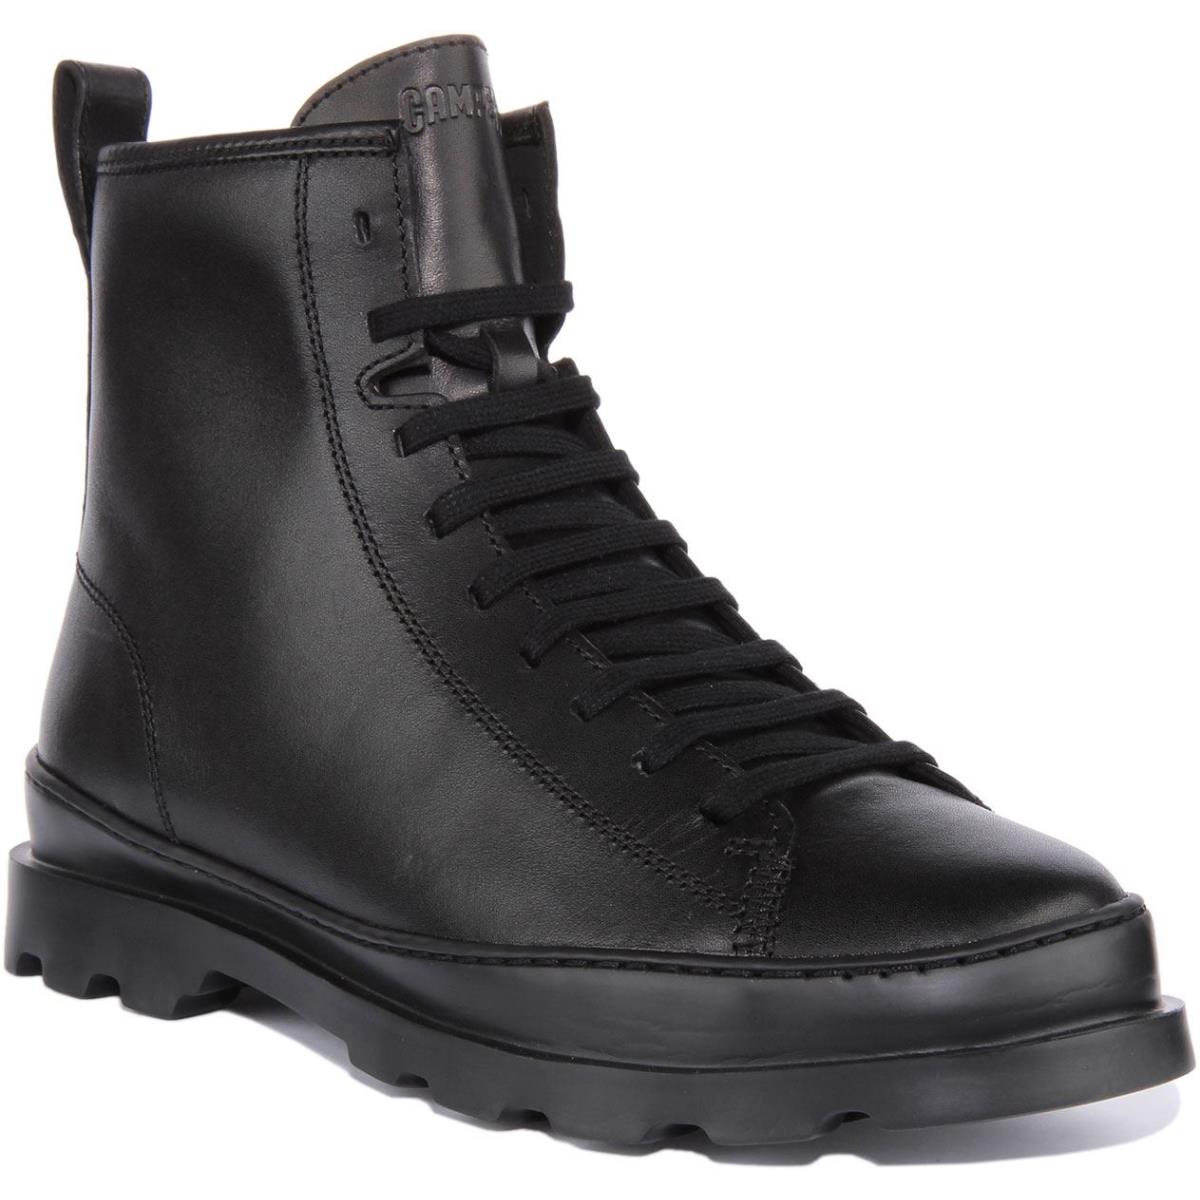 Camper Brutus Side Zip Lace Up Rugged Sole Leather Boots Black Mens US 7 - 13 BLACK